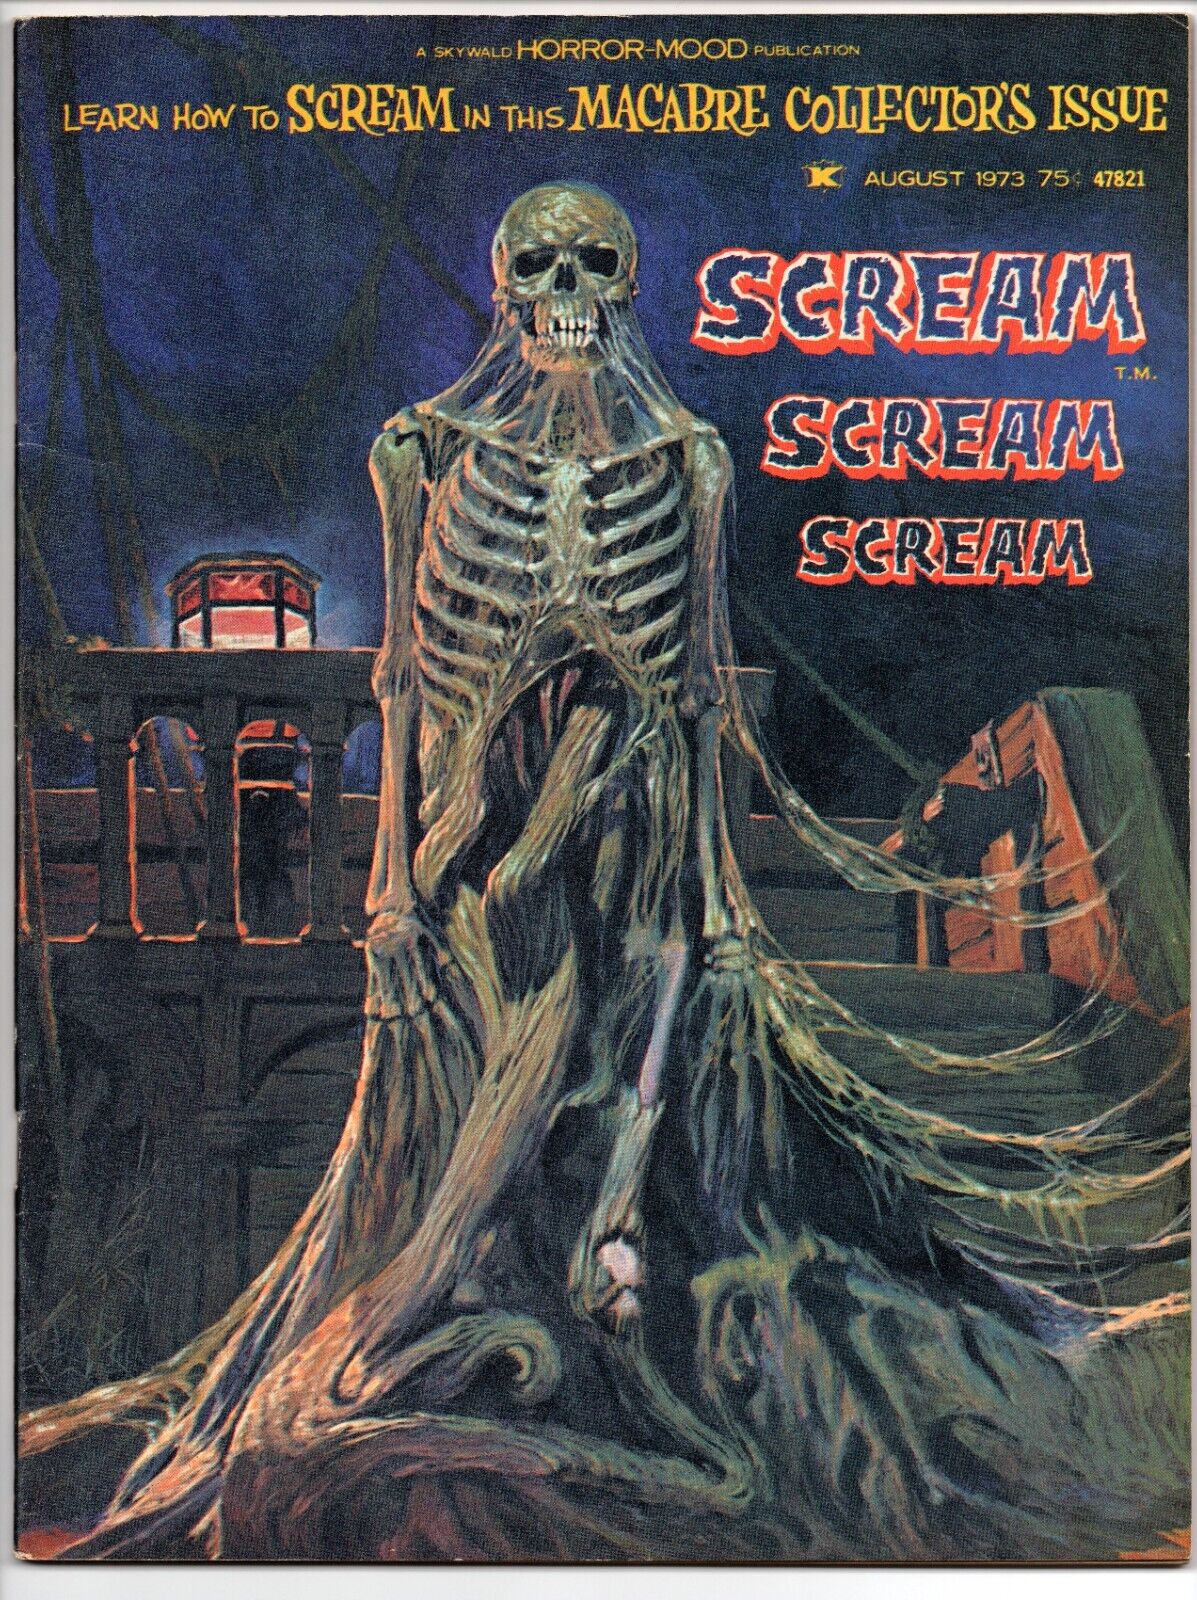 SCREAM 1 August 1973 Nosferatu USA comic book SKYWALD HORROR MOOD magazine FN+